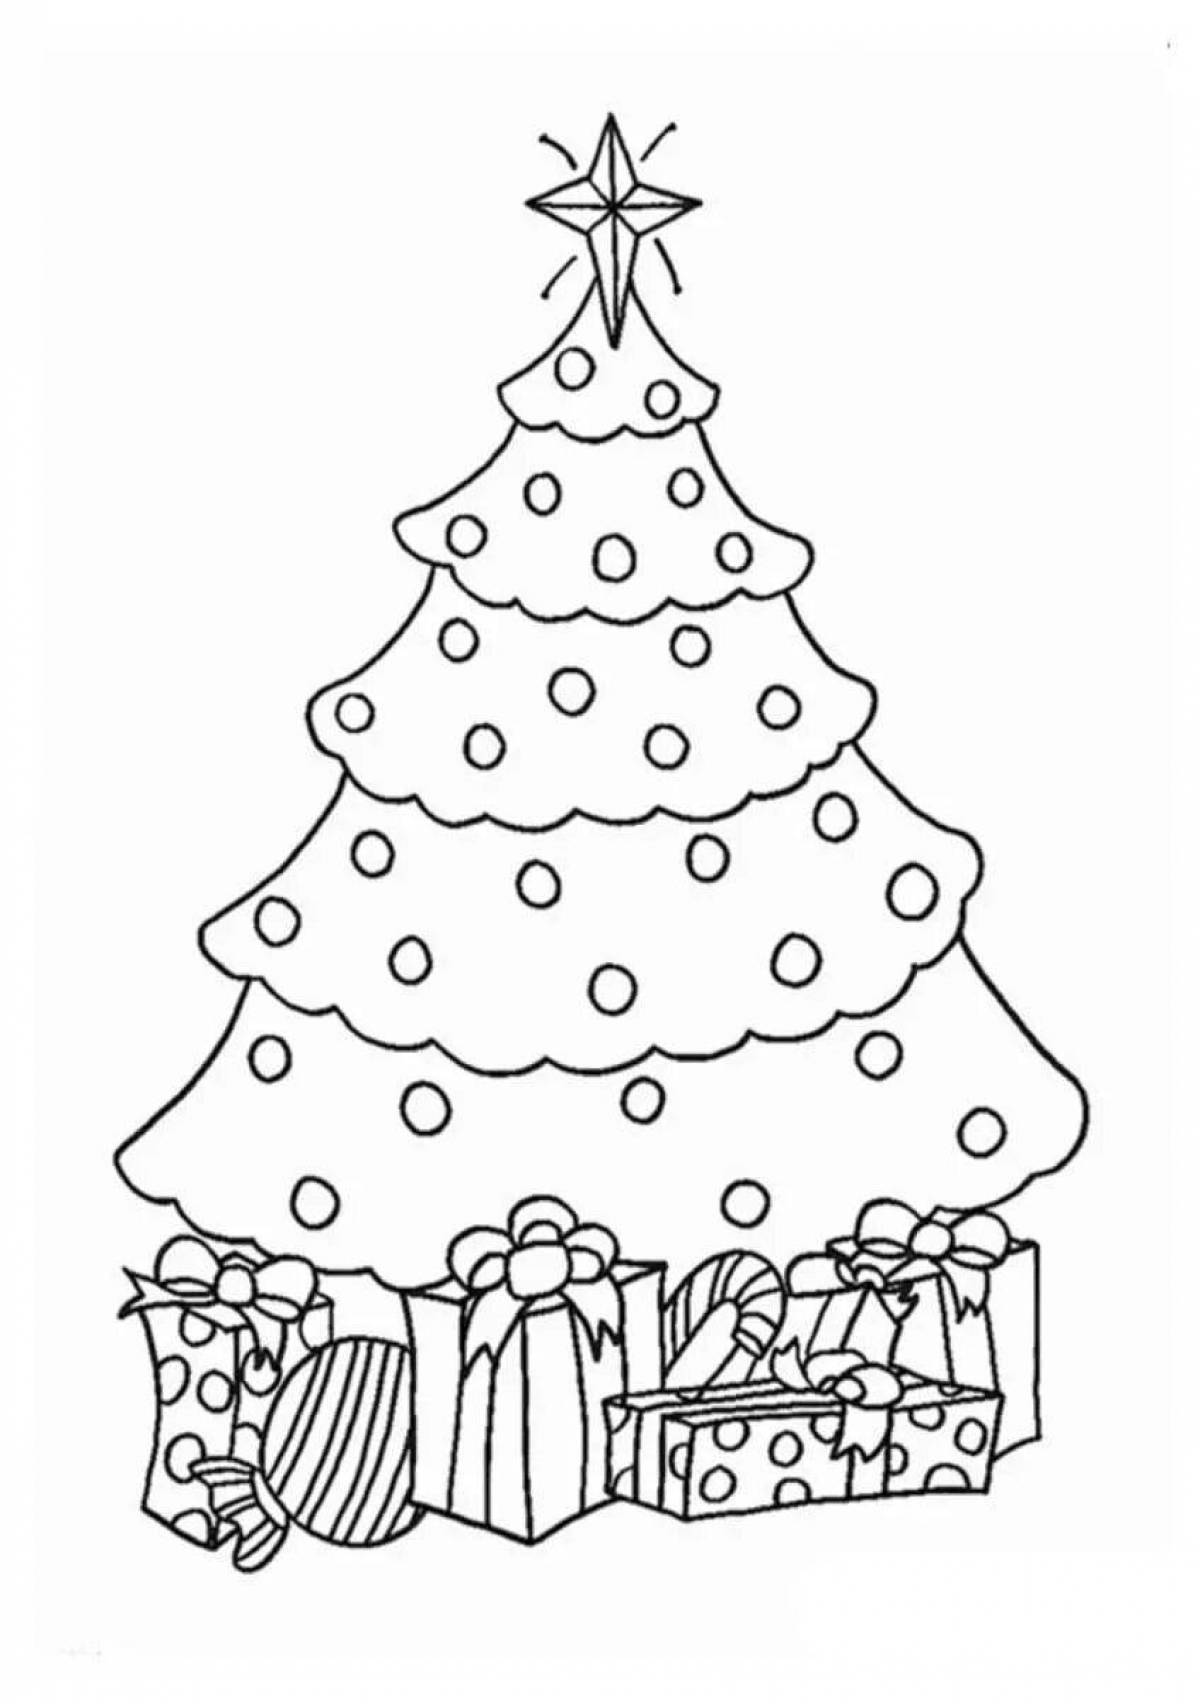 Adorable Christmas tree coloring book